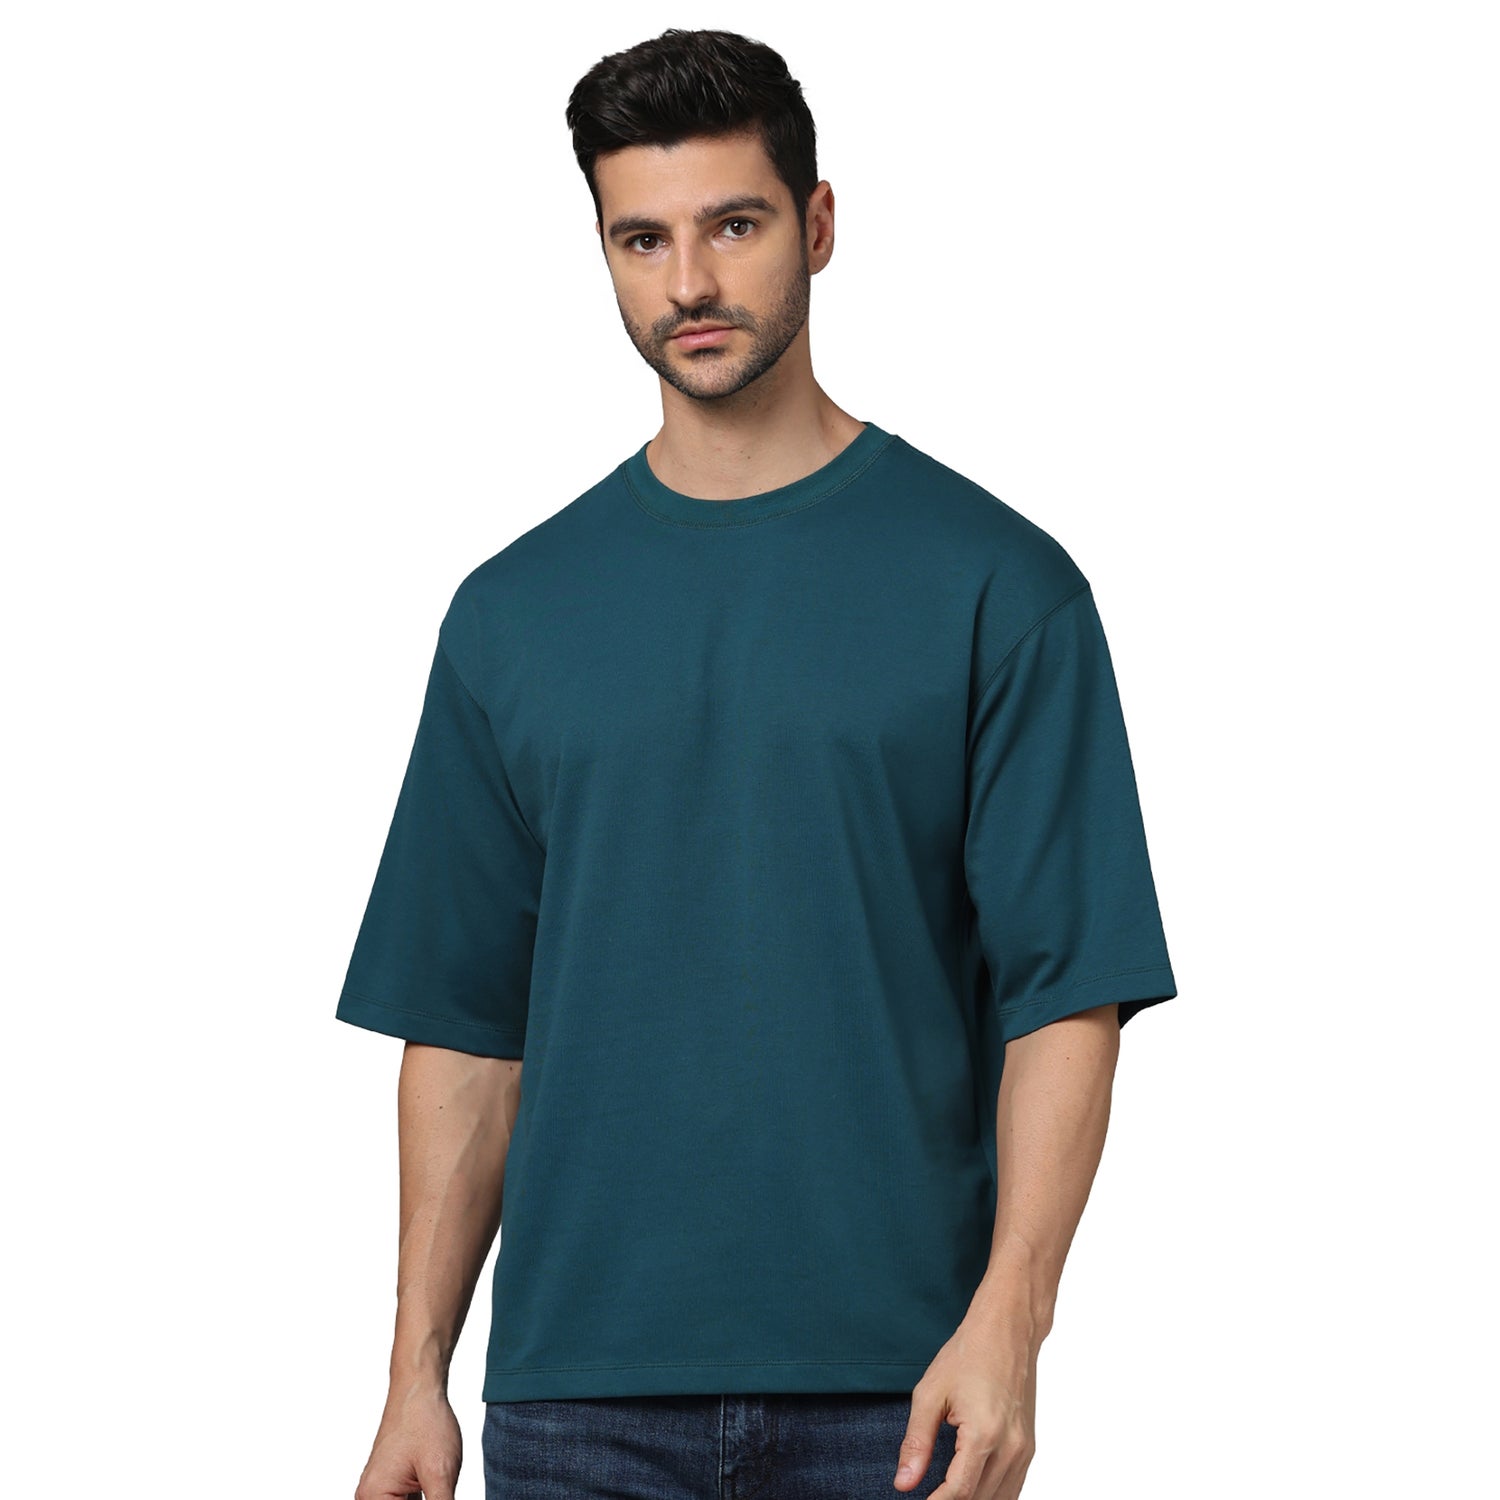 Men's Green Round Neck Solid Oversized Cotton Fashion Tshirts (GEHEMIN)